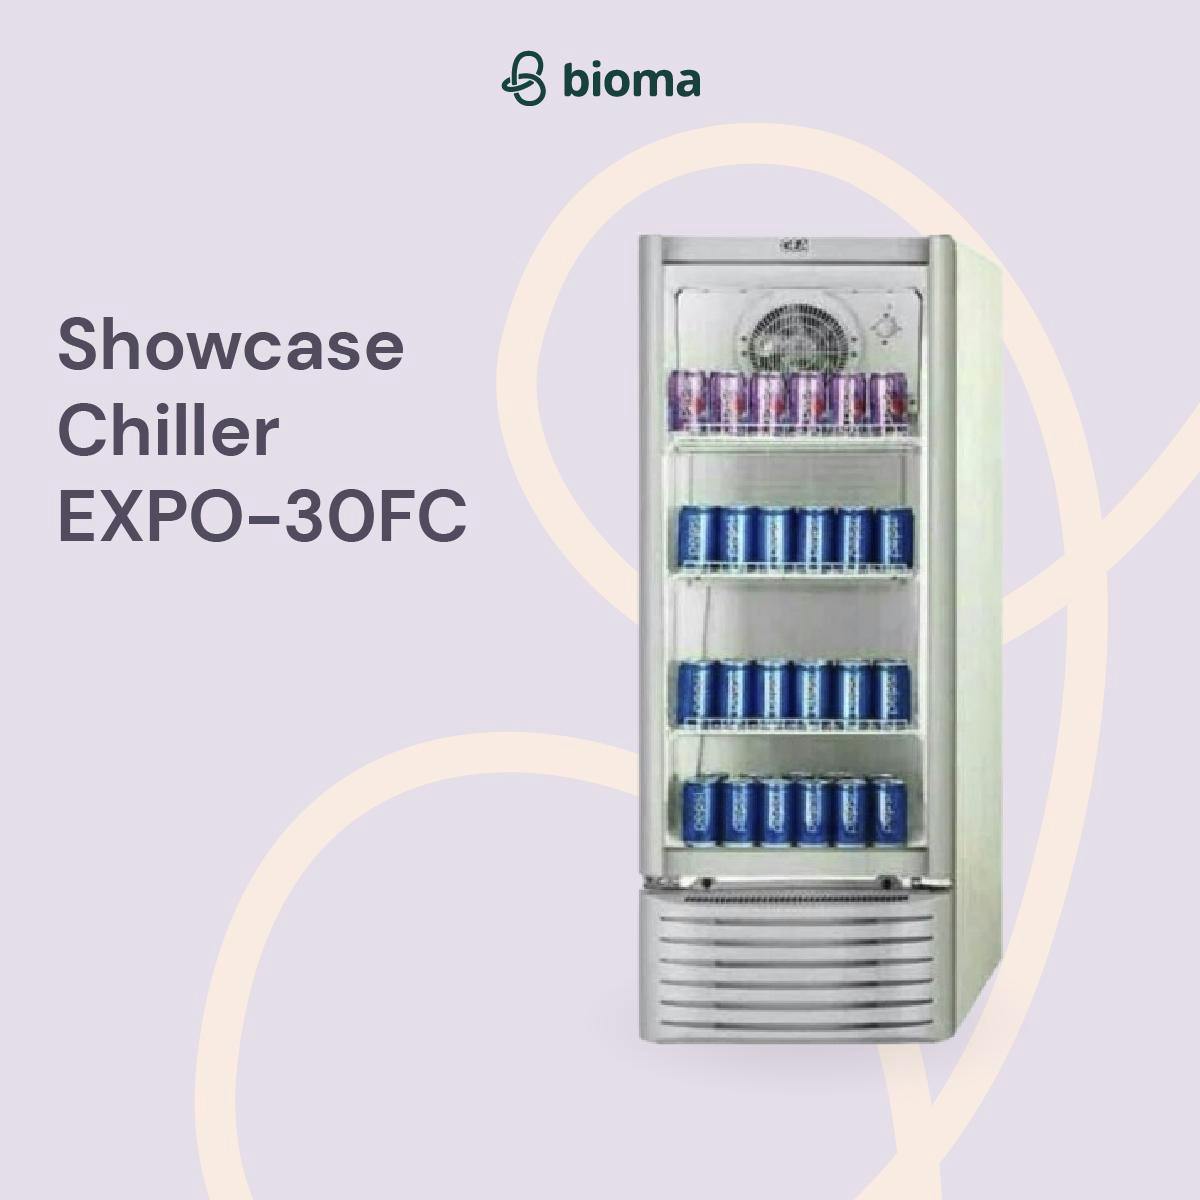 Showcase Chiller EXPO-30FC